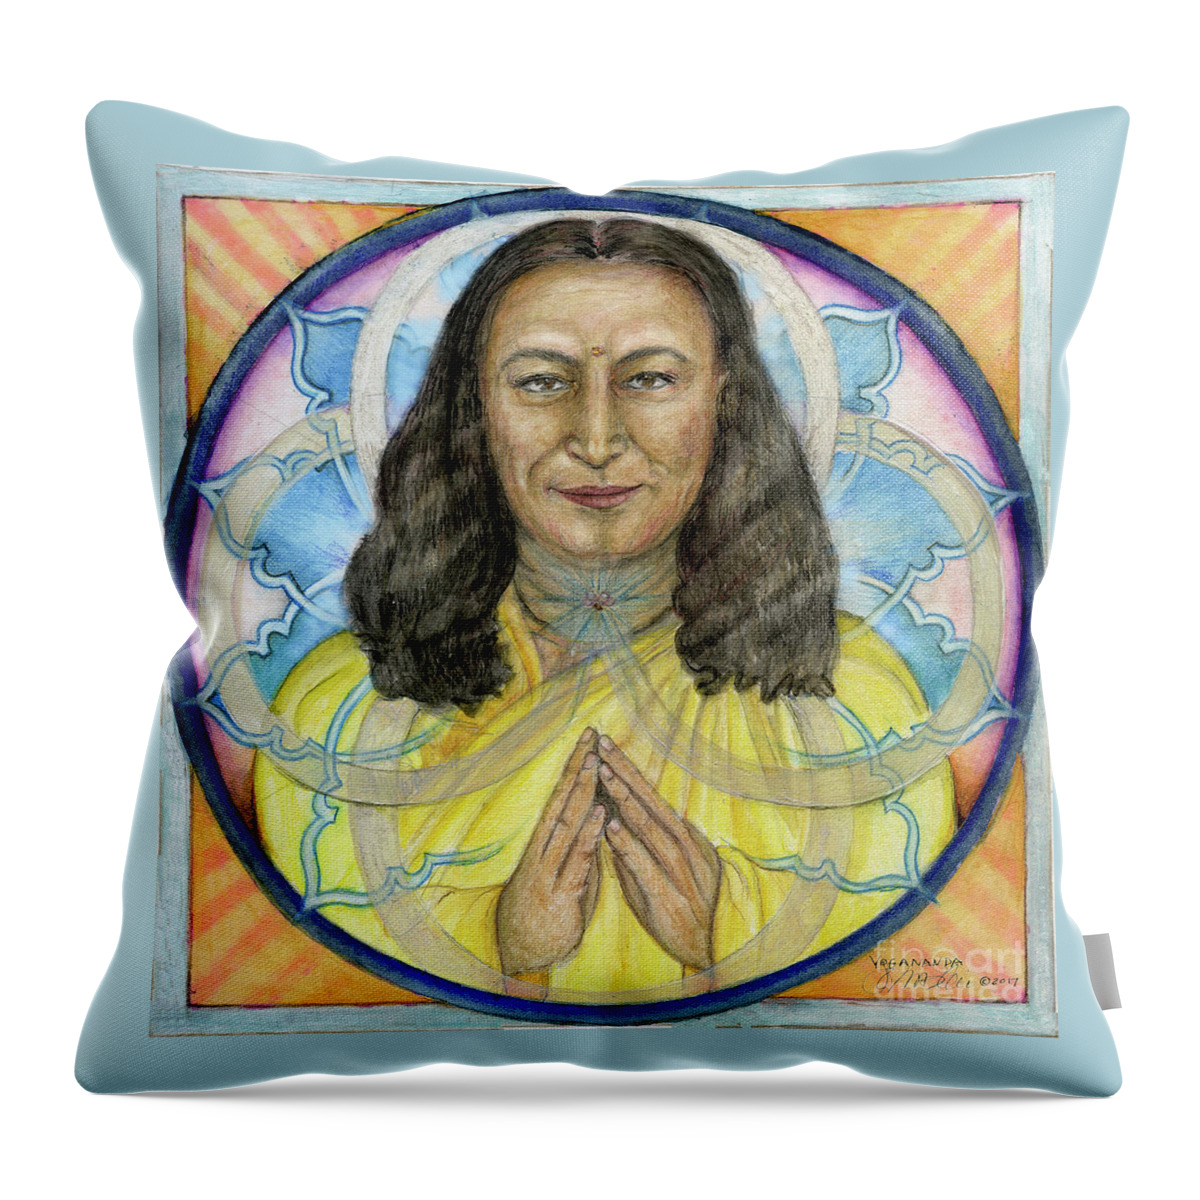 Mandala Throw Pillow featuring the painting Yogananda by Jo Thomas Blaine